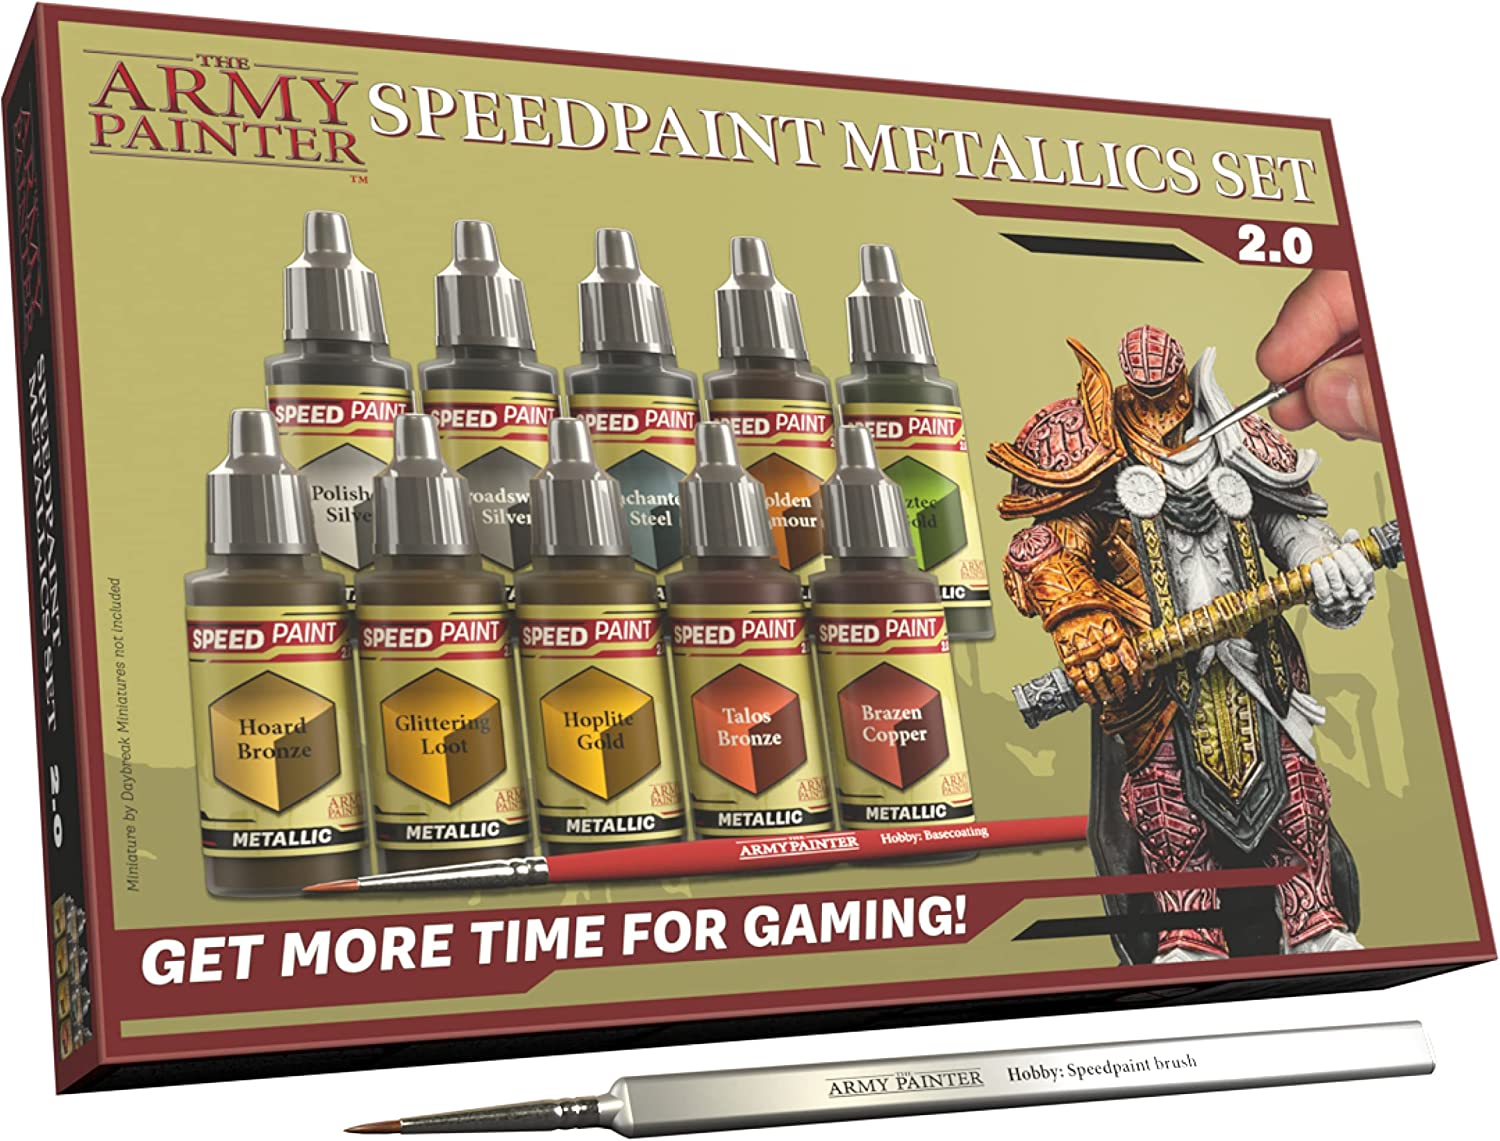 The Army Painter: Speedpaint Metallics Set 2.0